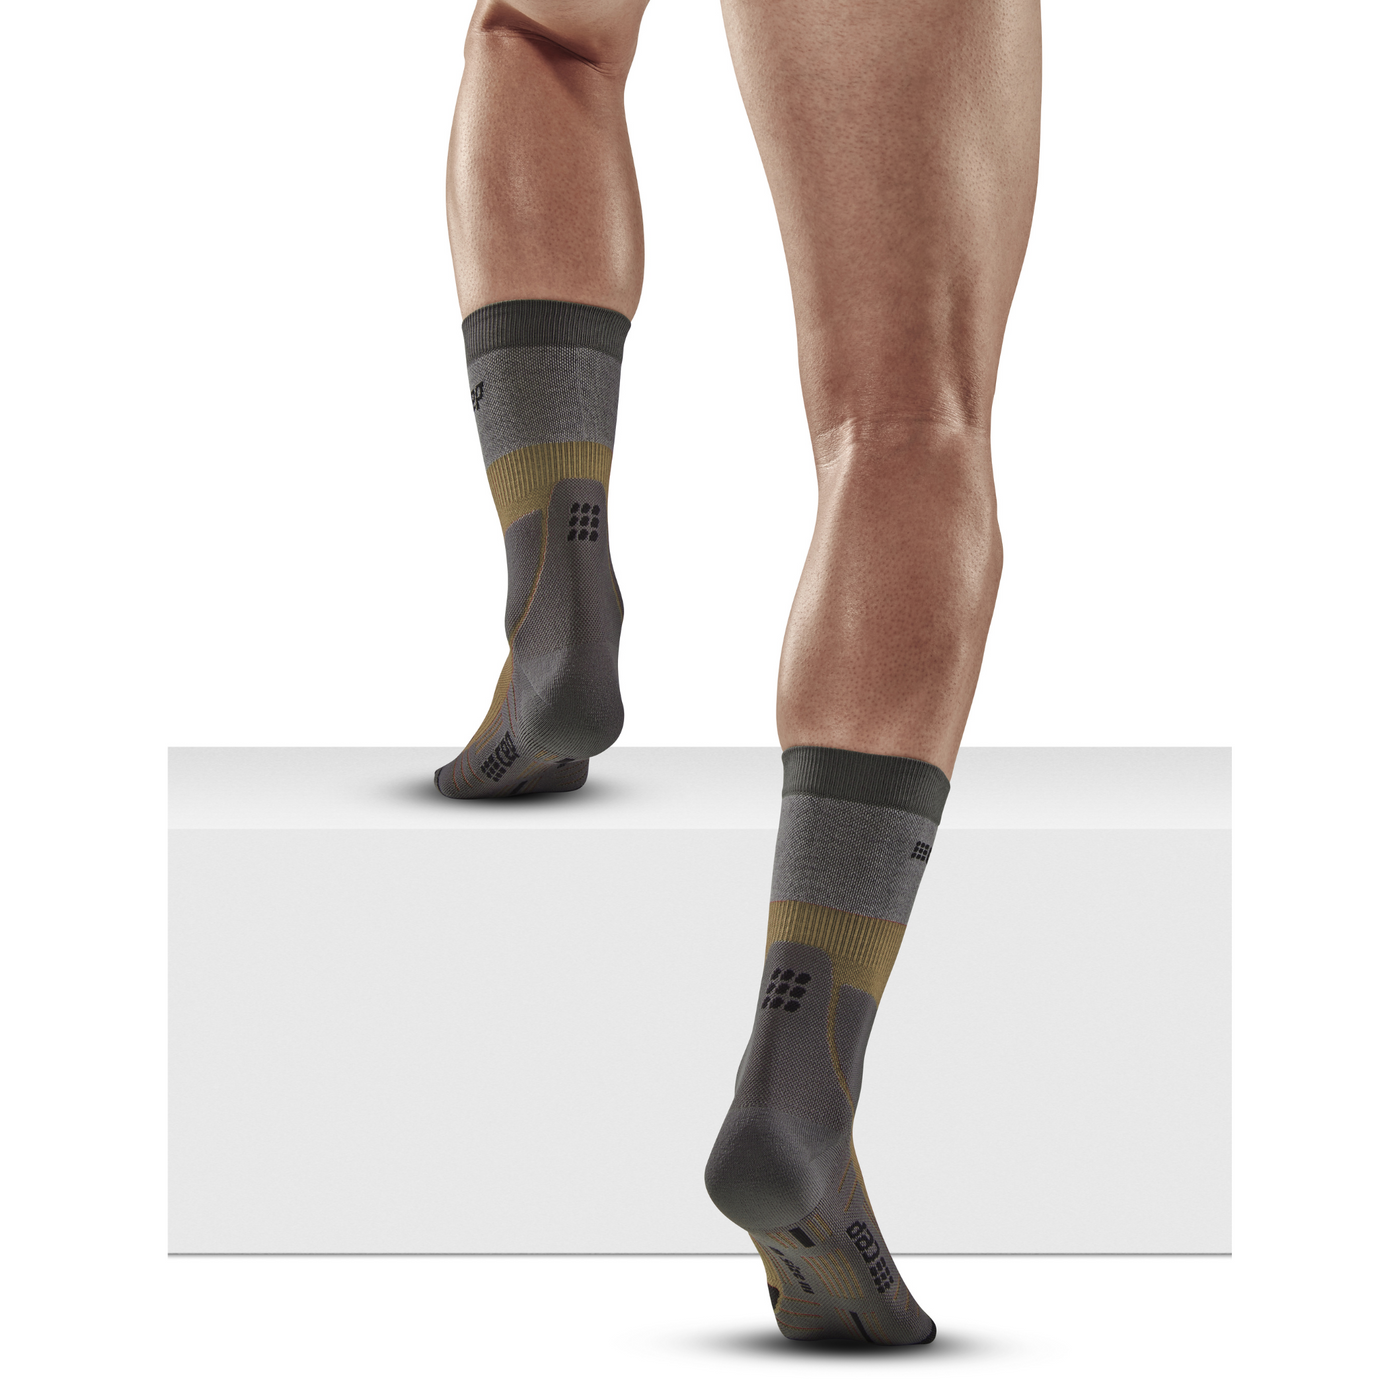 Star Of David Socks (Men's and Women's Sizes)